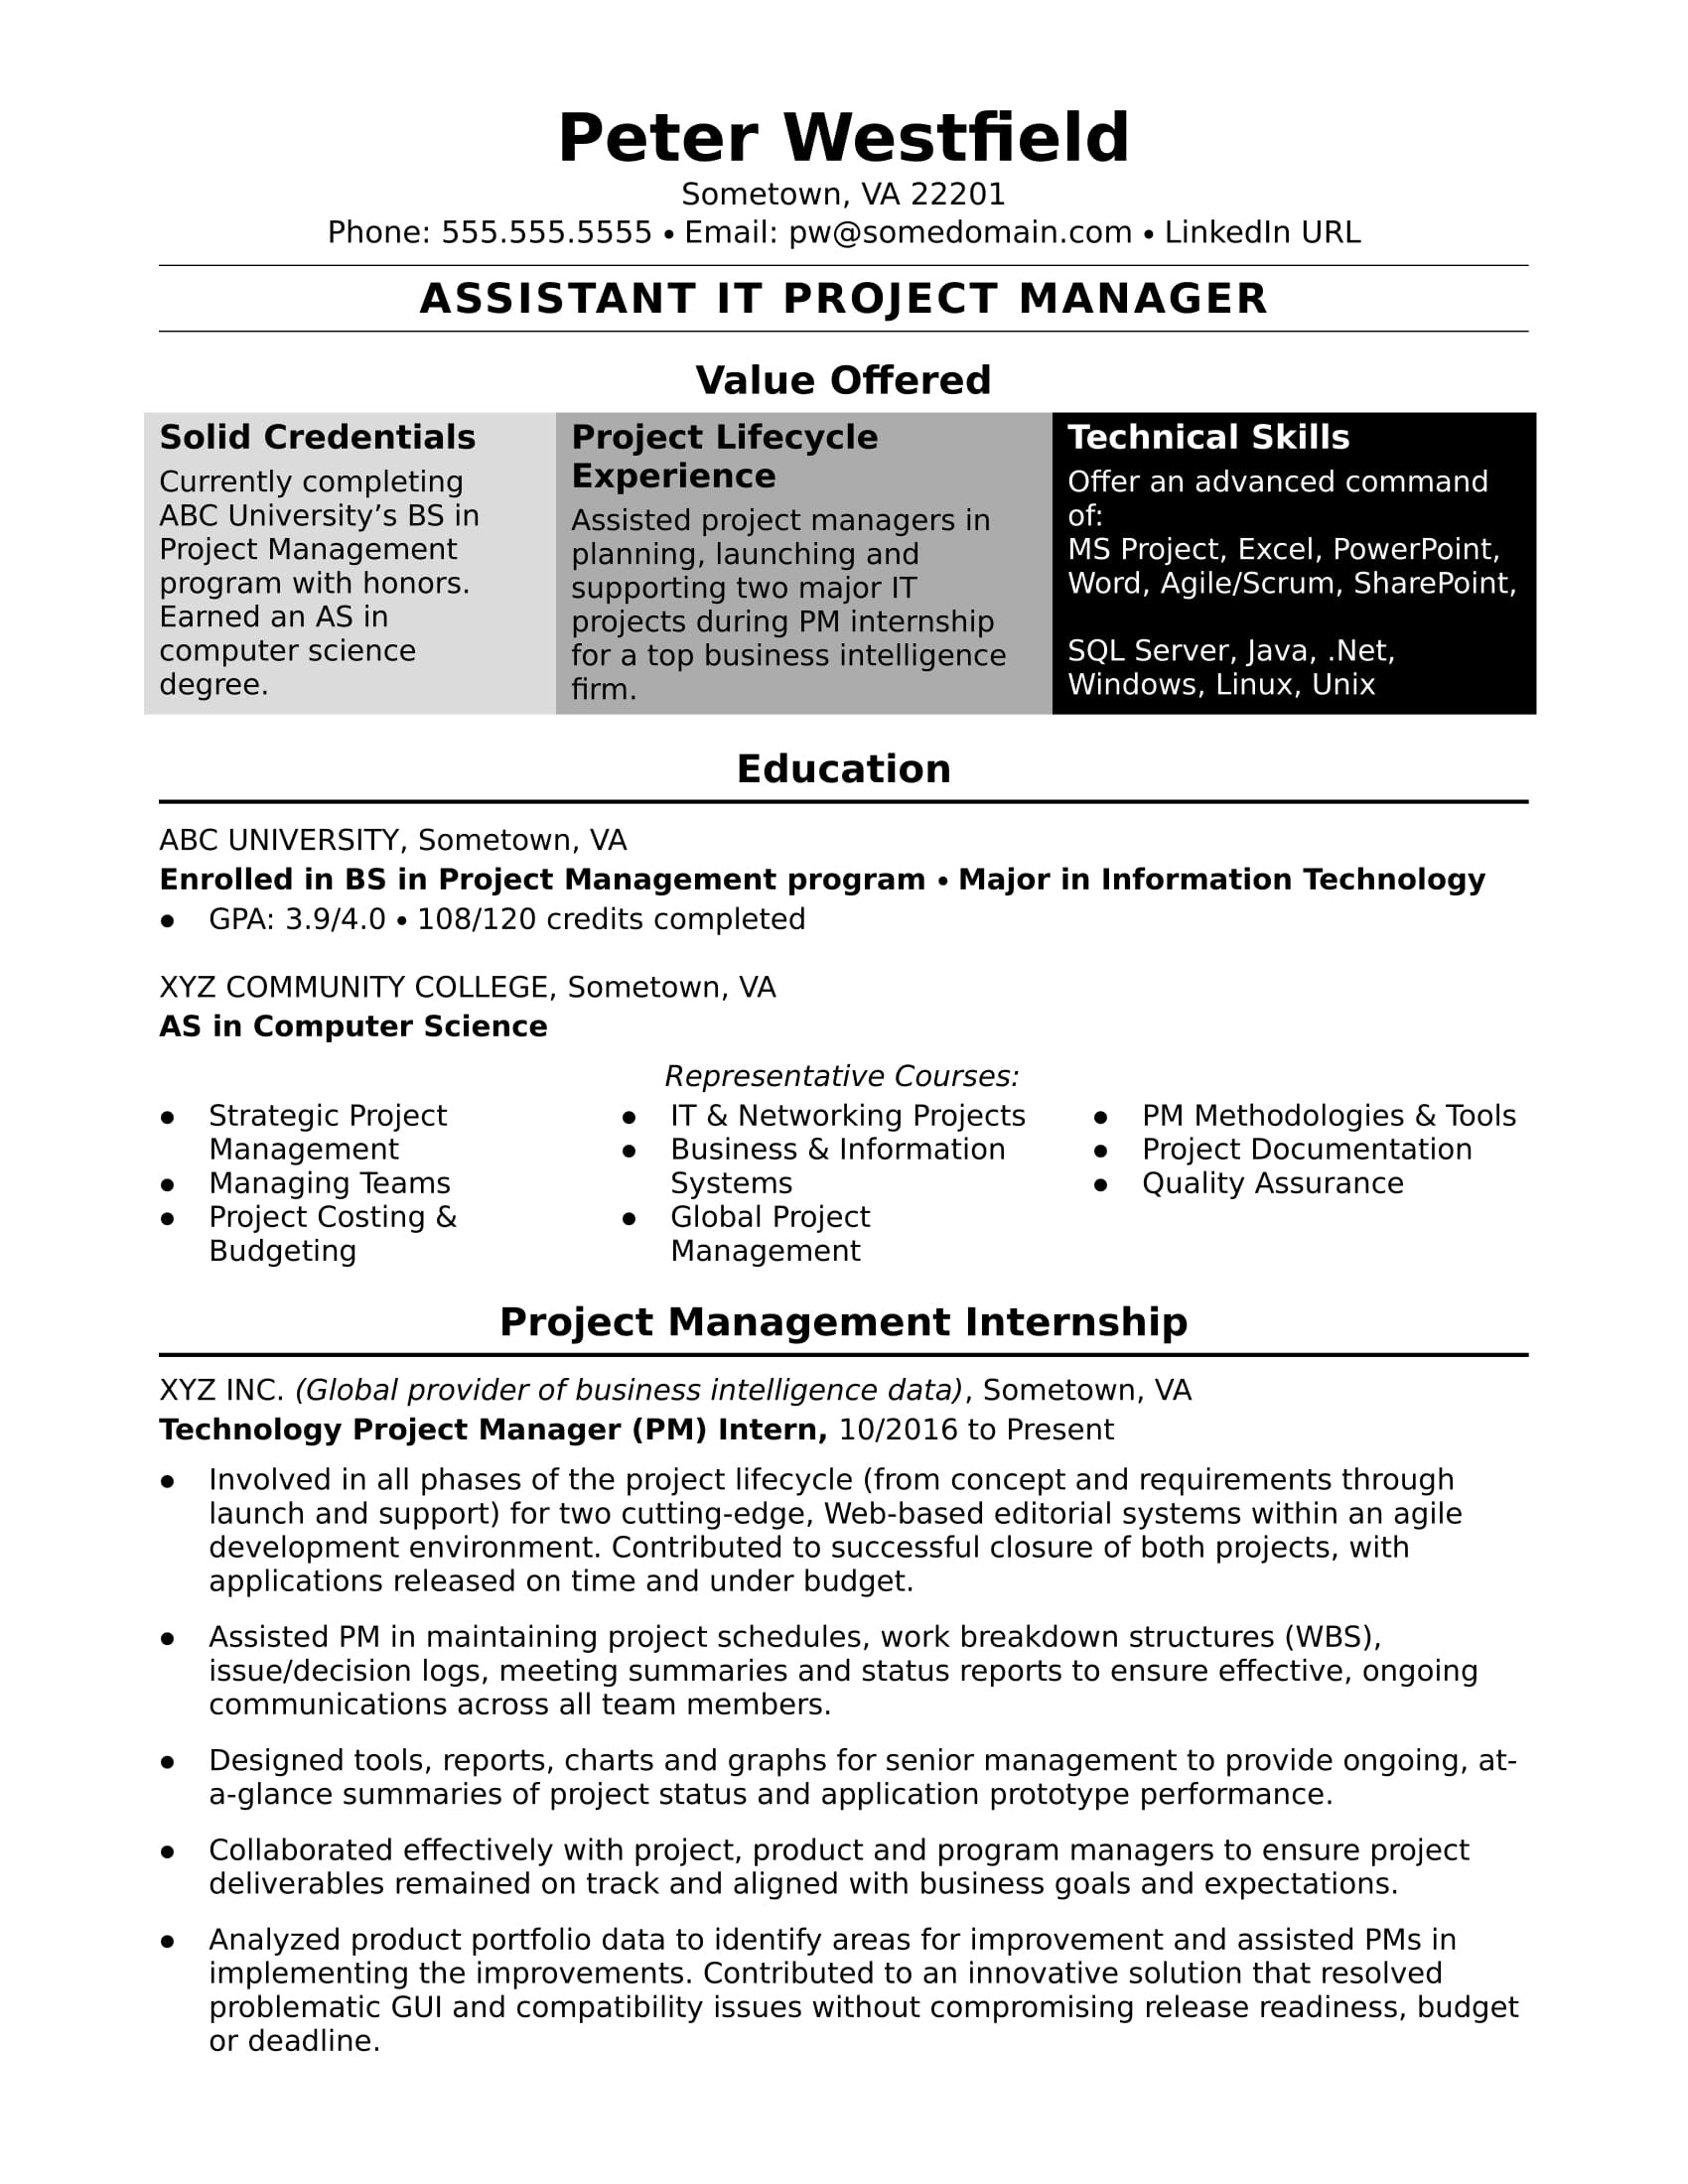 Sample Resume for Entry Level Project Management Sample Resume for An assistant It Project Manager Monster.com